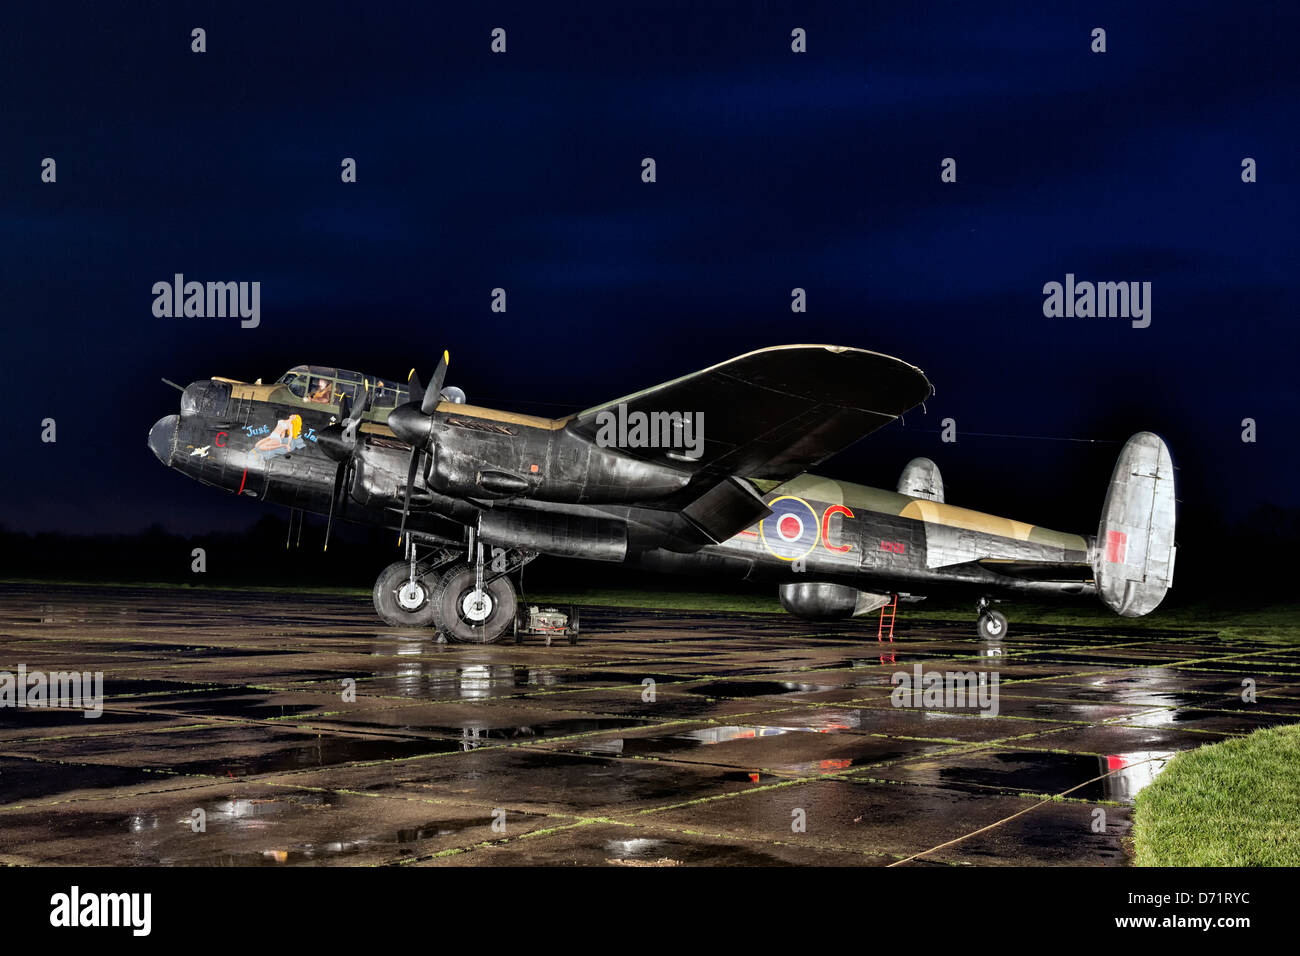 Avro Lancaster B1 - RAF World war 2 bomber on the apron at night Stock Photo